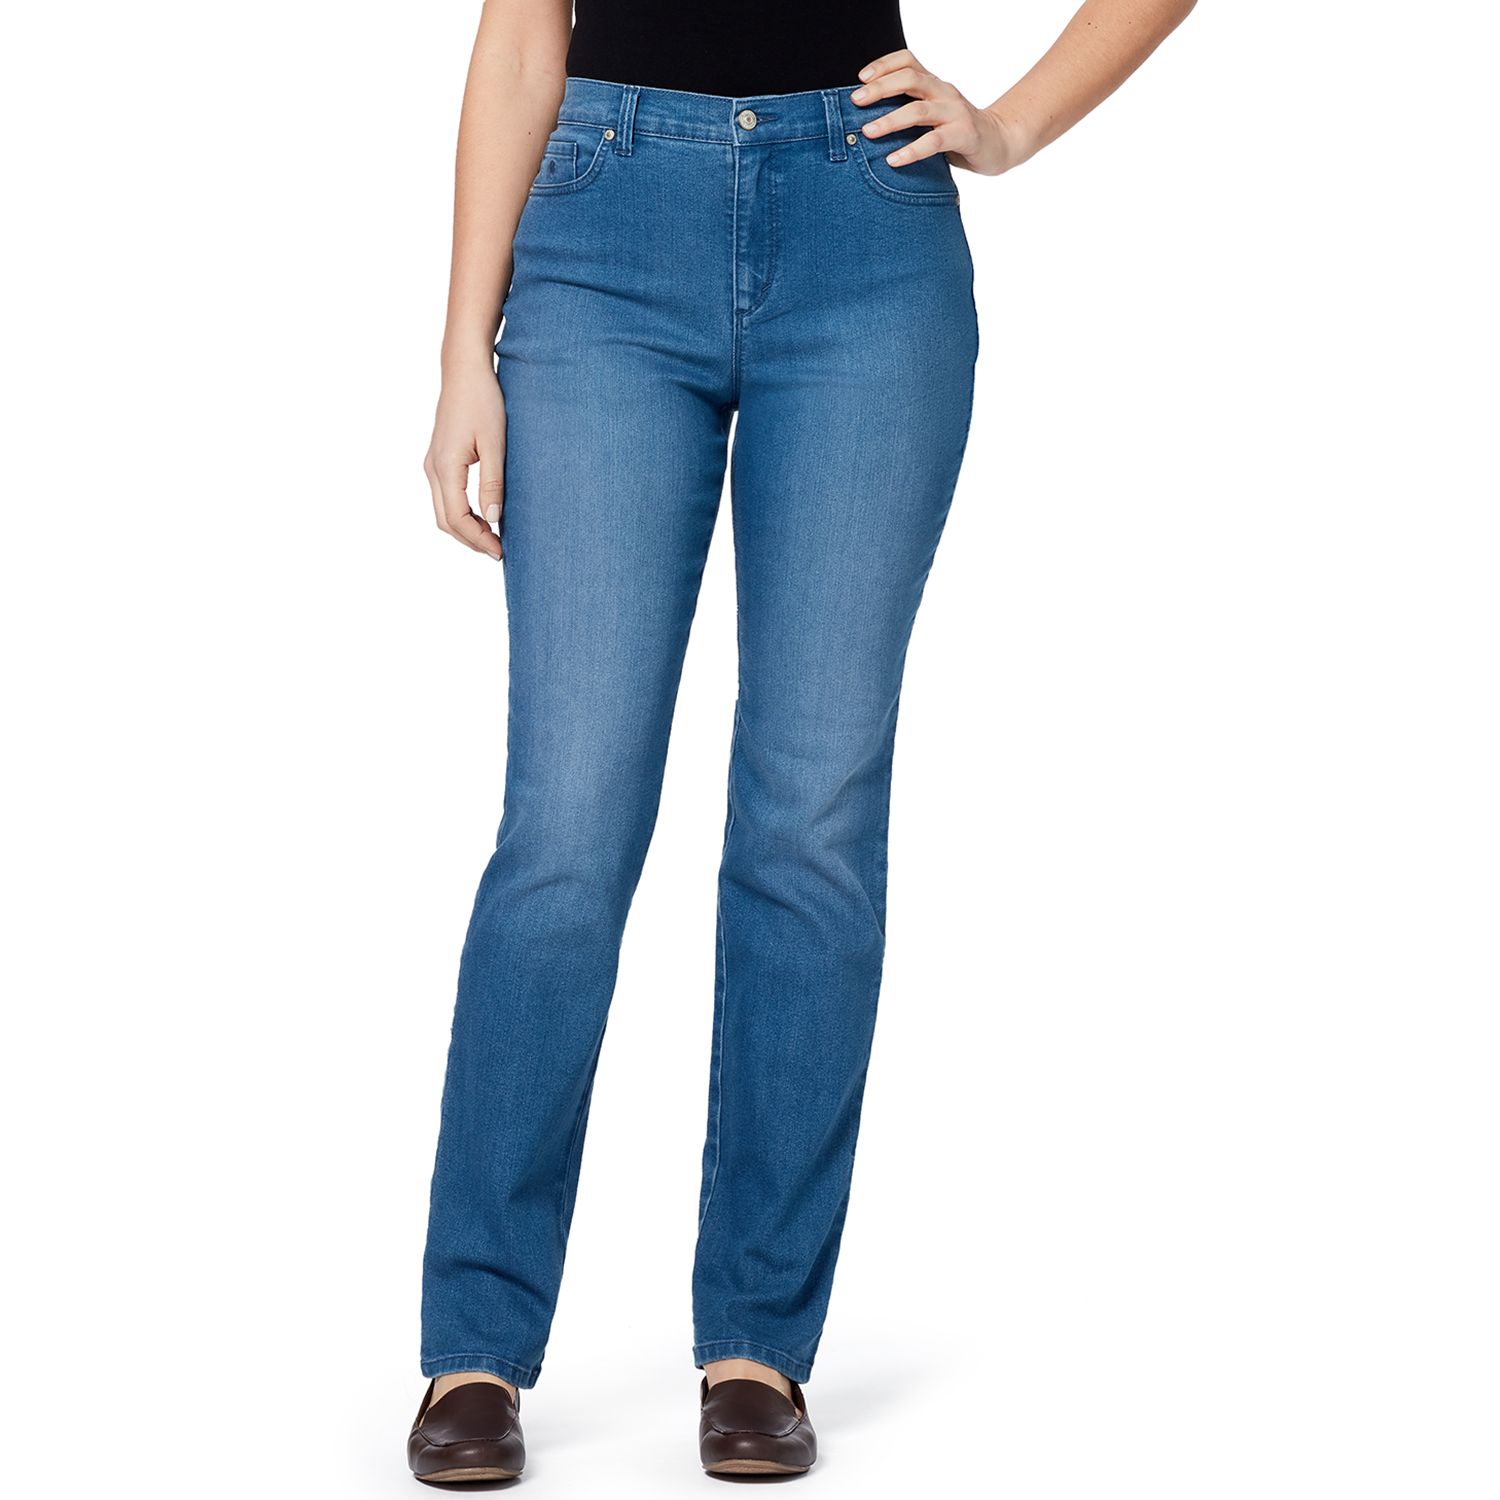 skinny gloria vanderbilt jeans